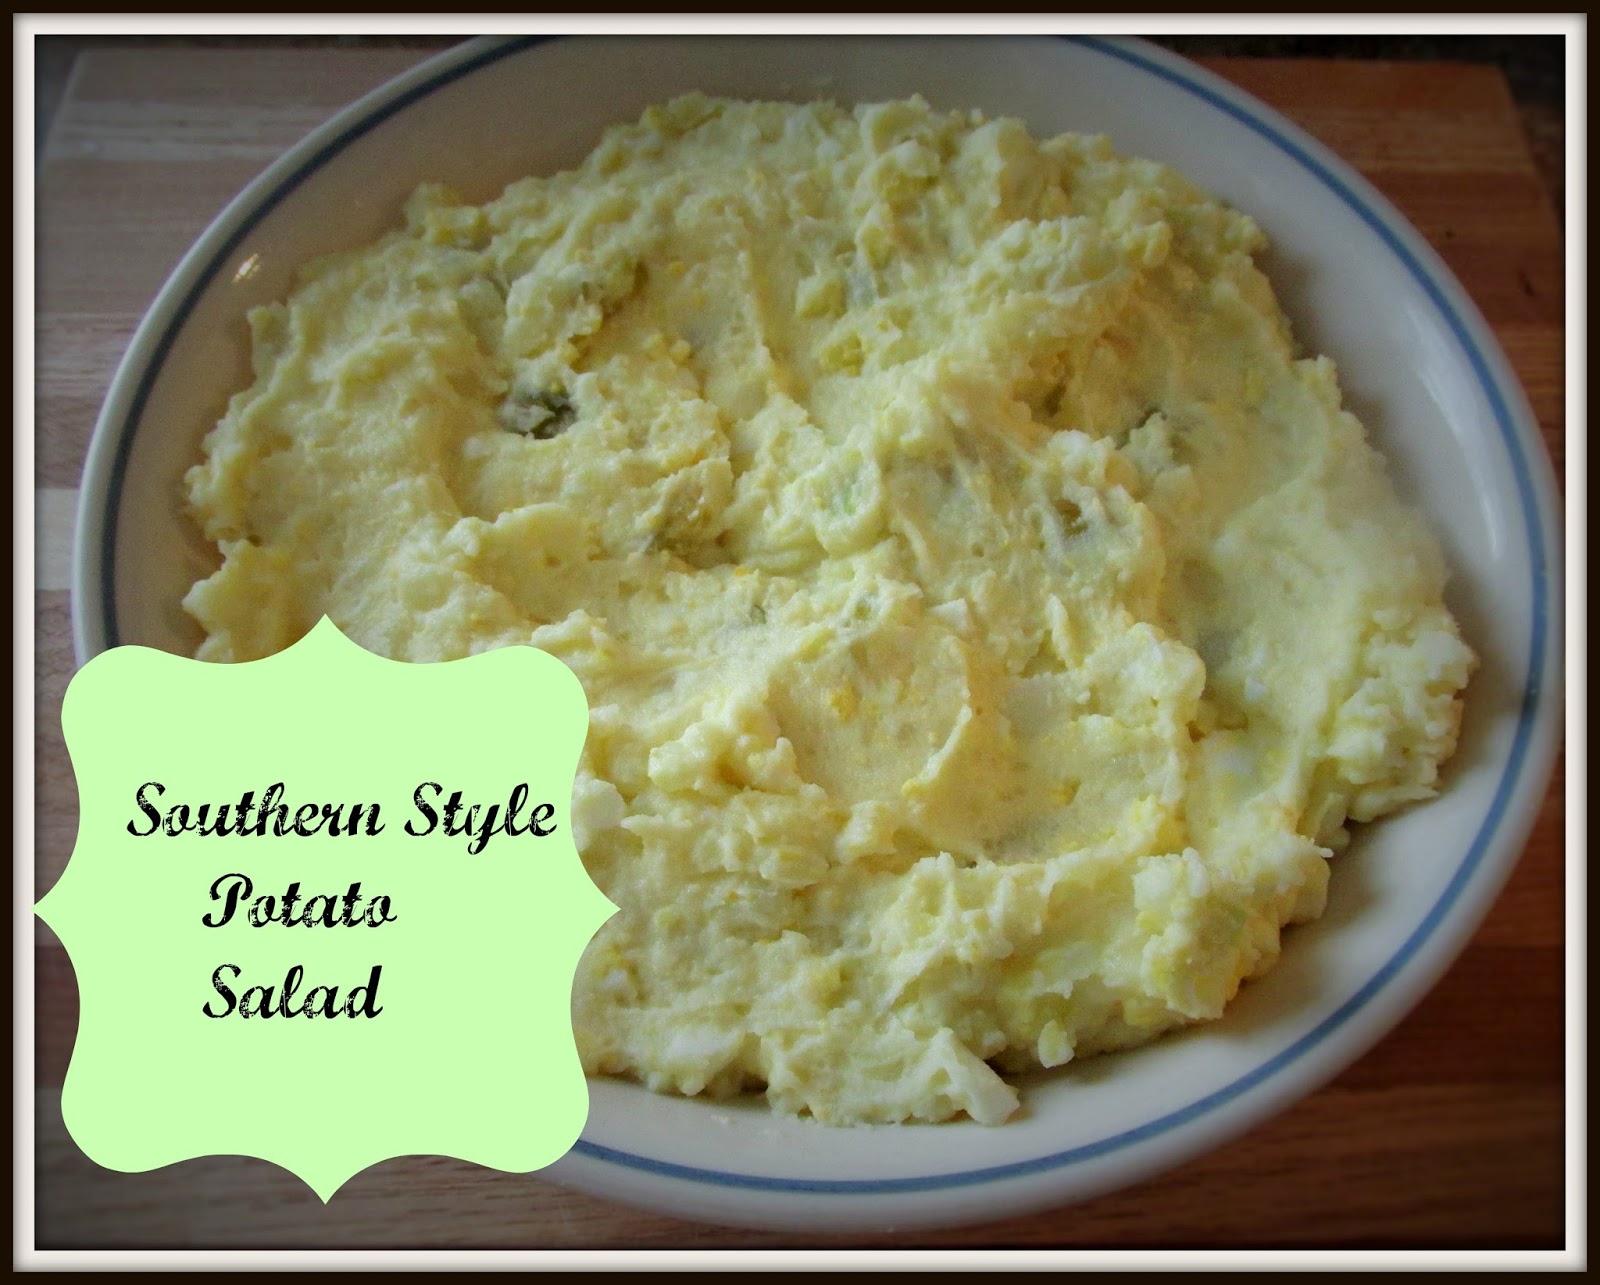 Vickie's Kitchen and Garden: Recipe: Southern Style Potato Salad